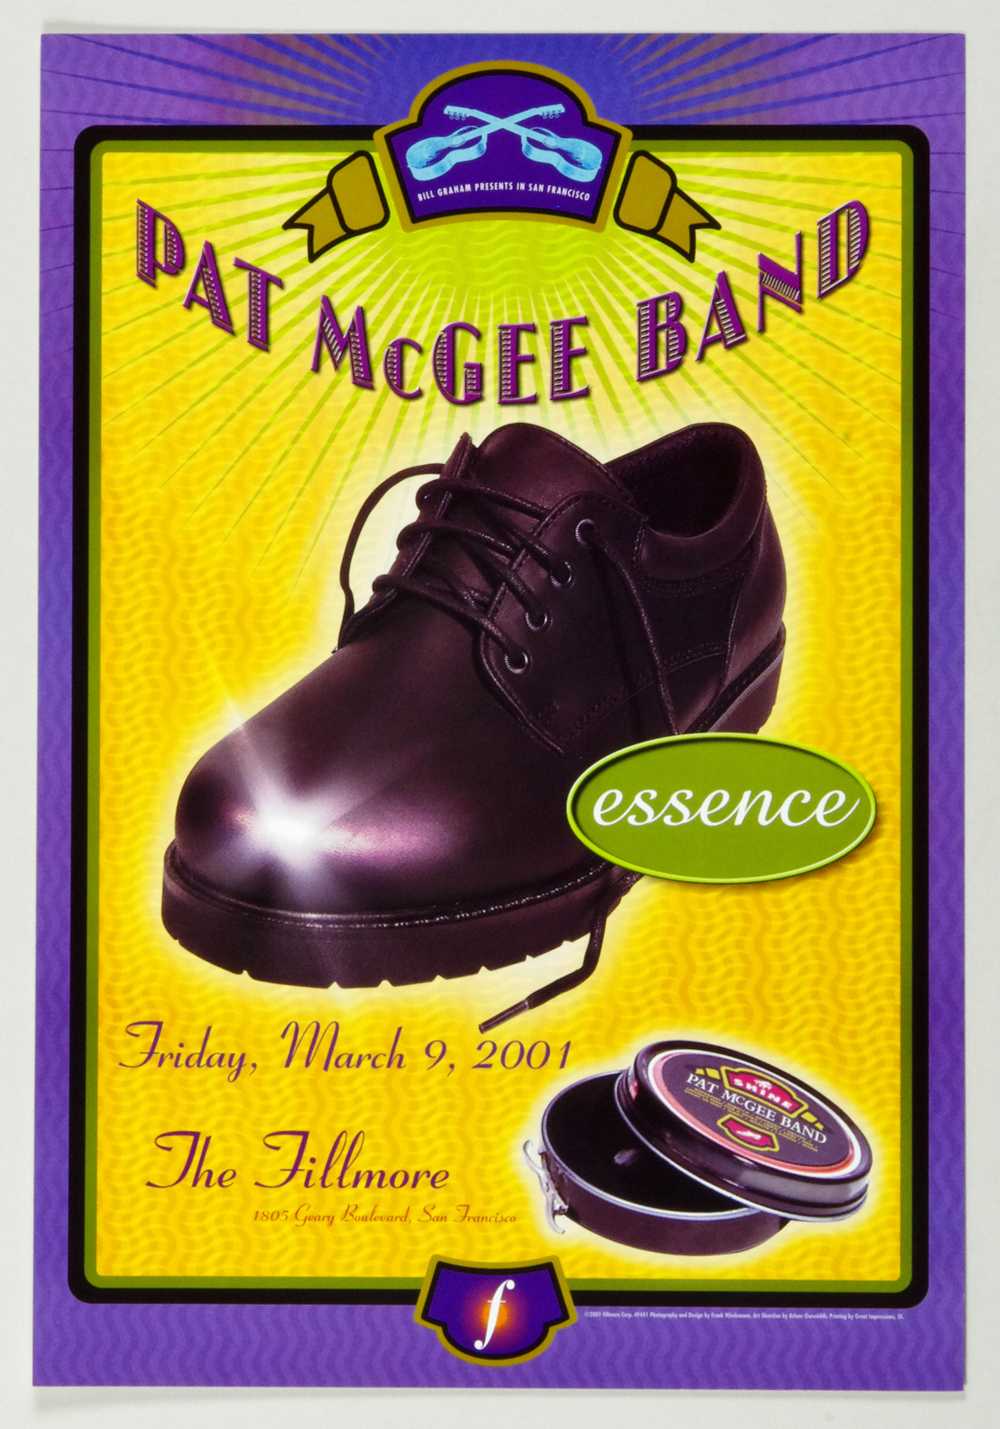 Pat McGee Band Poster 2001 Mar 9 New Fillmore